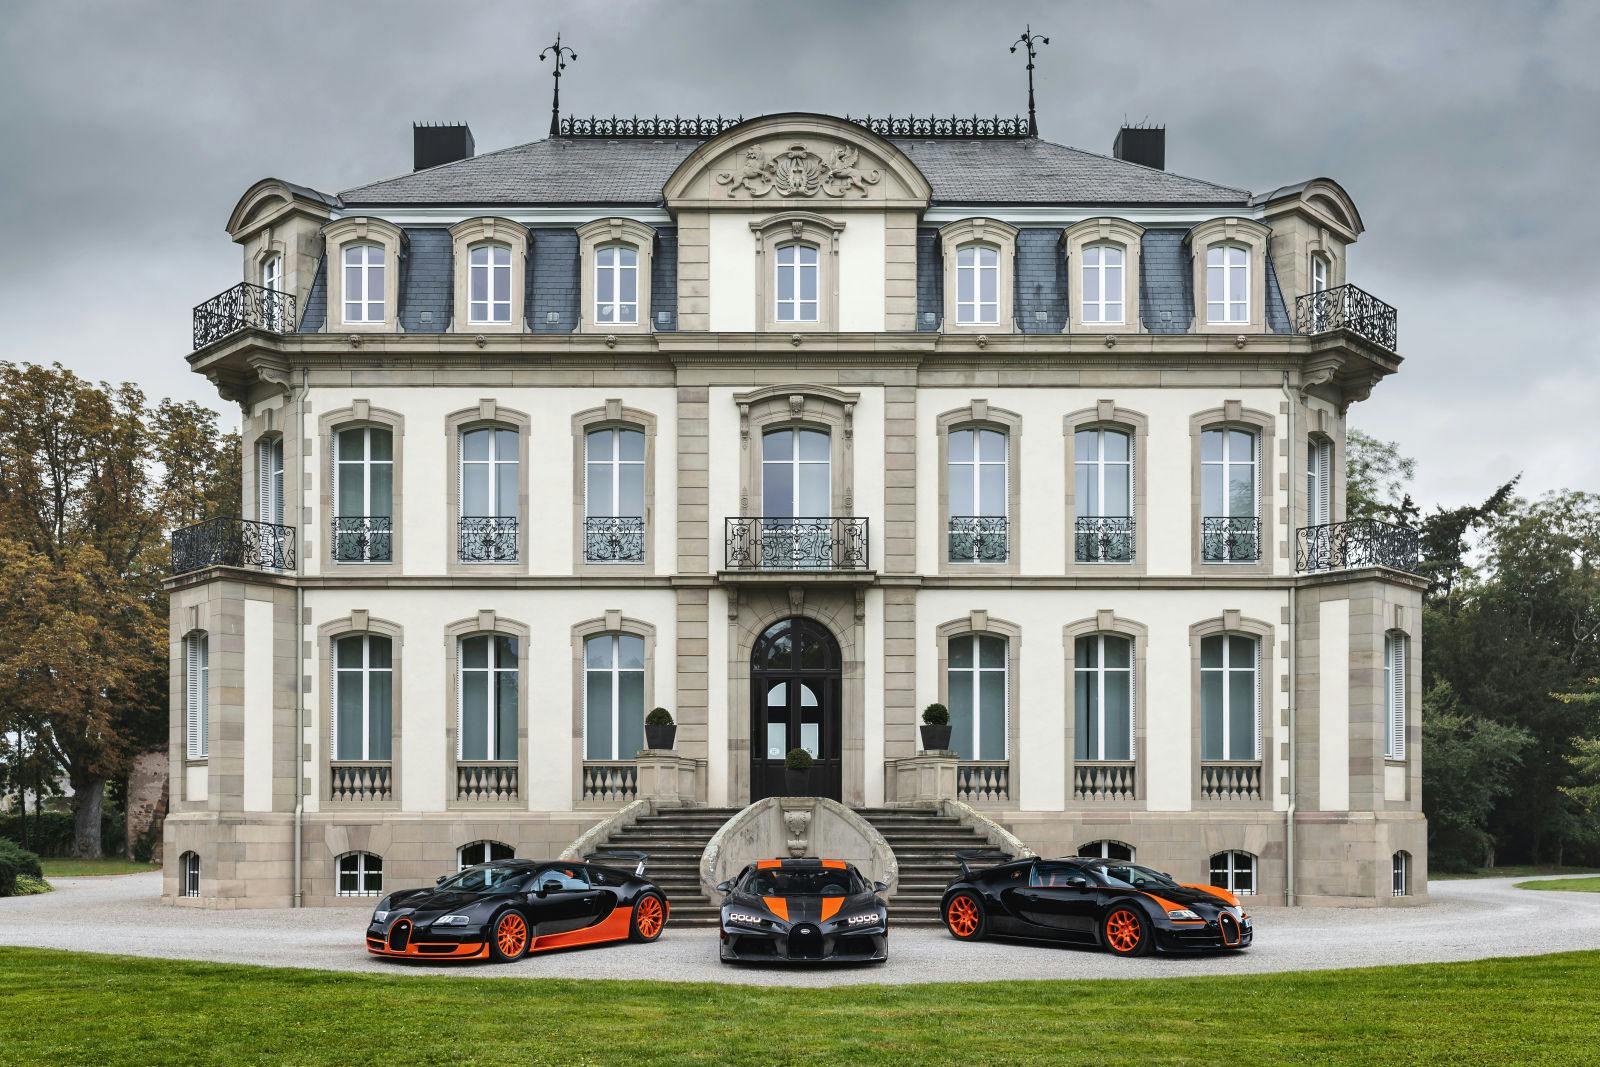 Bugatti's record cars of the modern era (from left to right): Veyron 16.4 Super Sport, Chiron Super Sport 300+, Veyron 16.4 Grand Sport Vitesse.